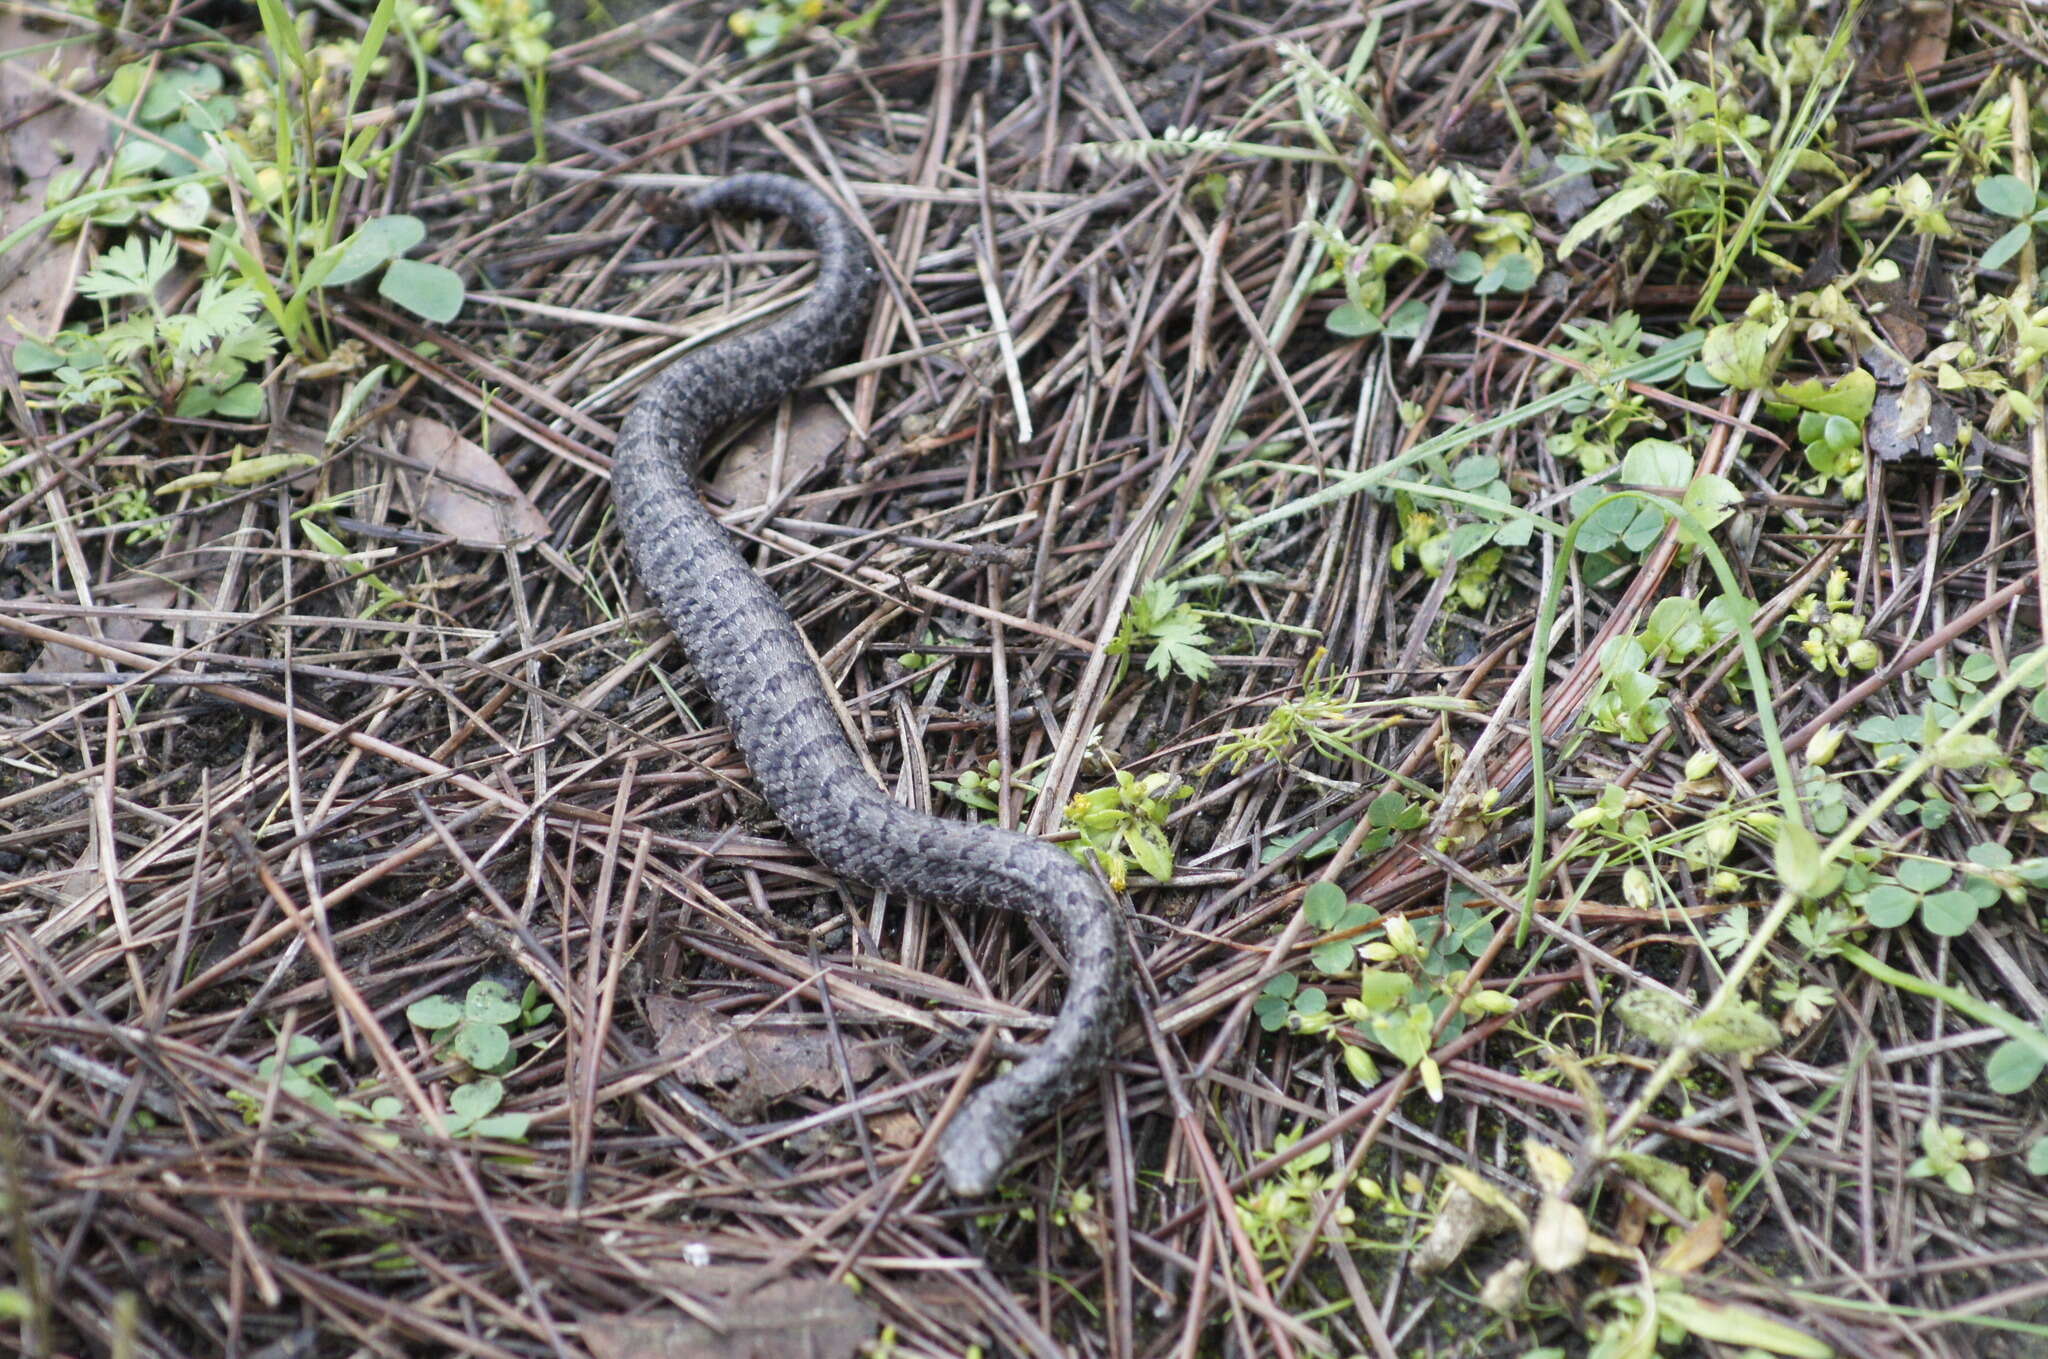 Image of Cross-banded Mountain Rattlesnake